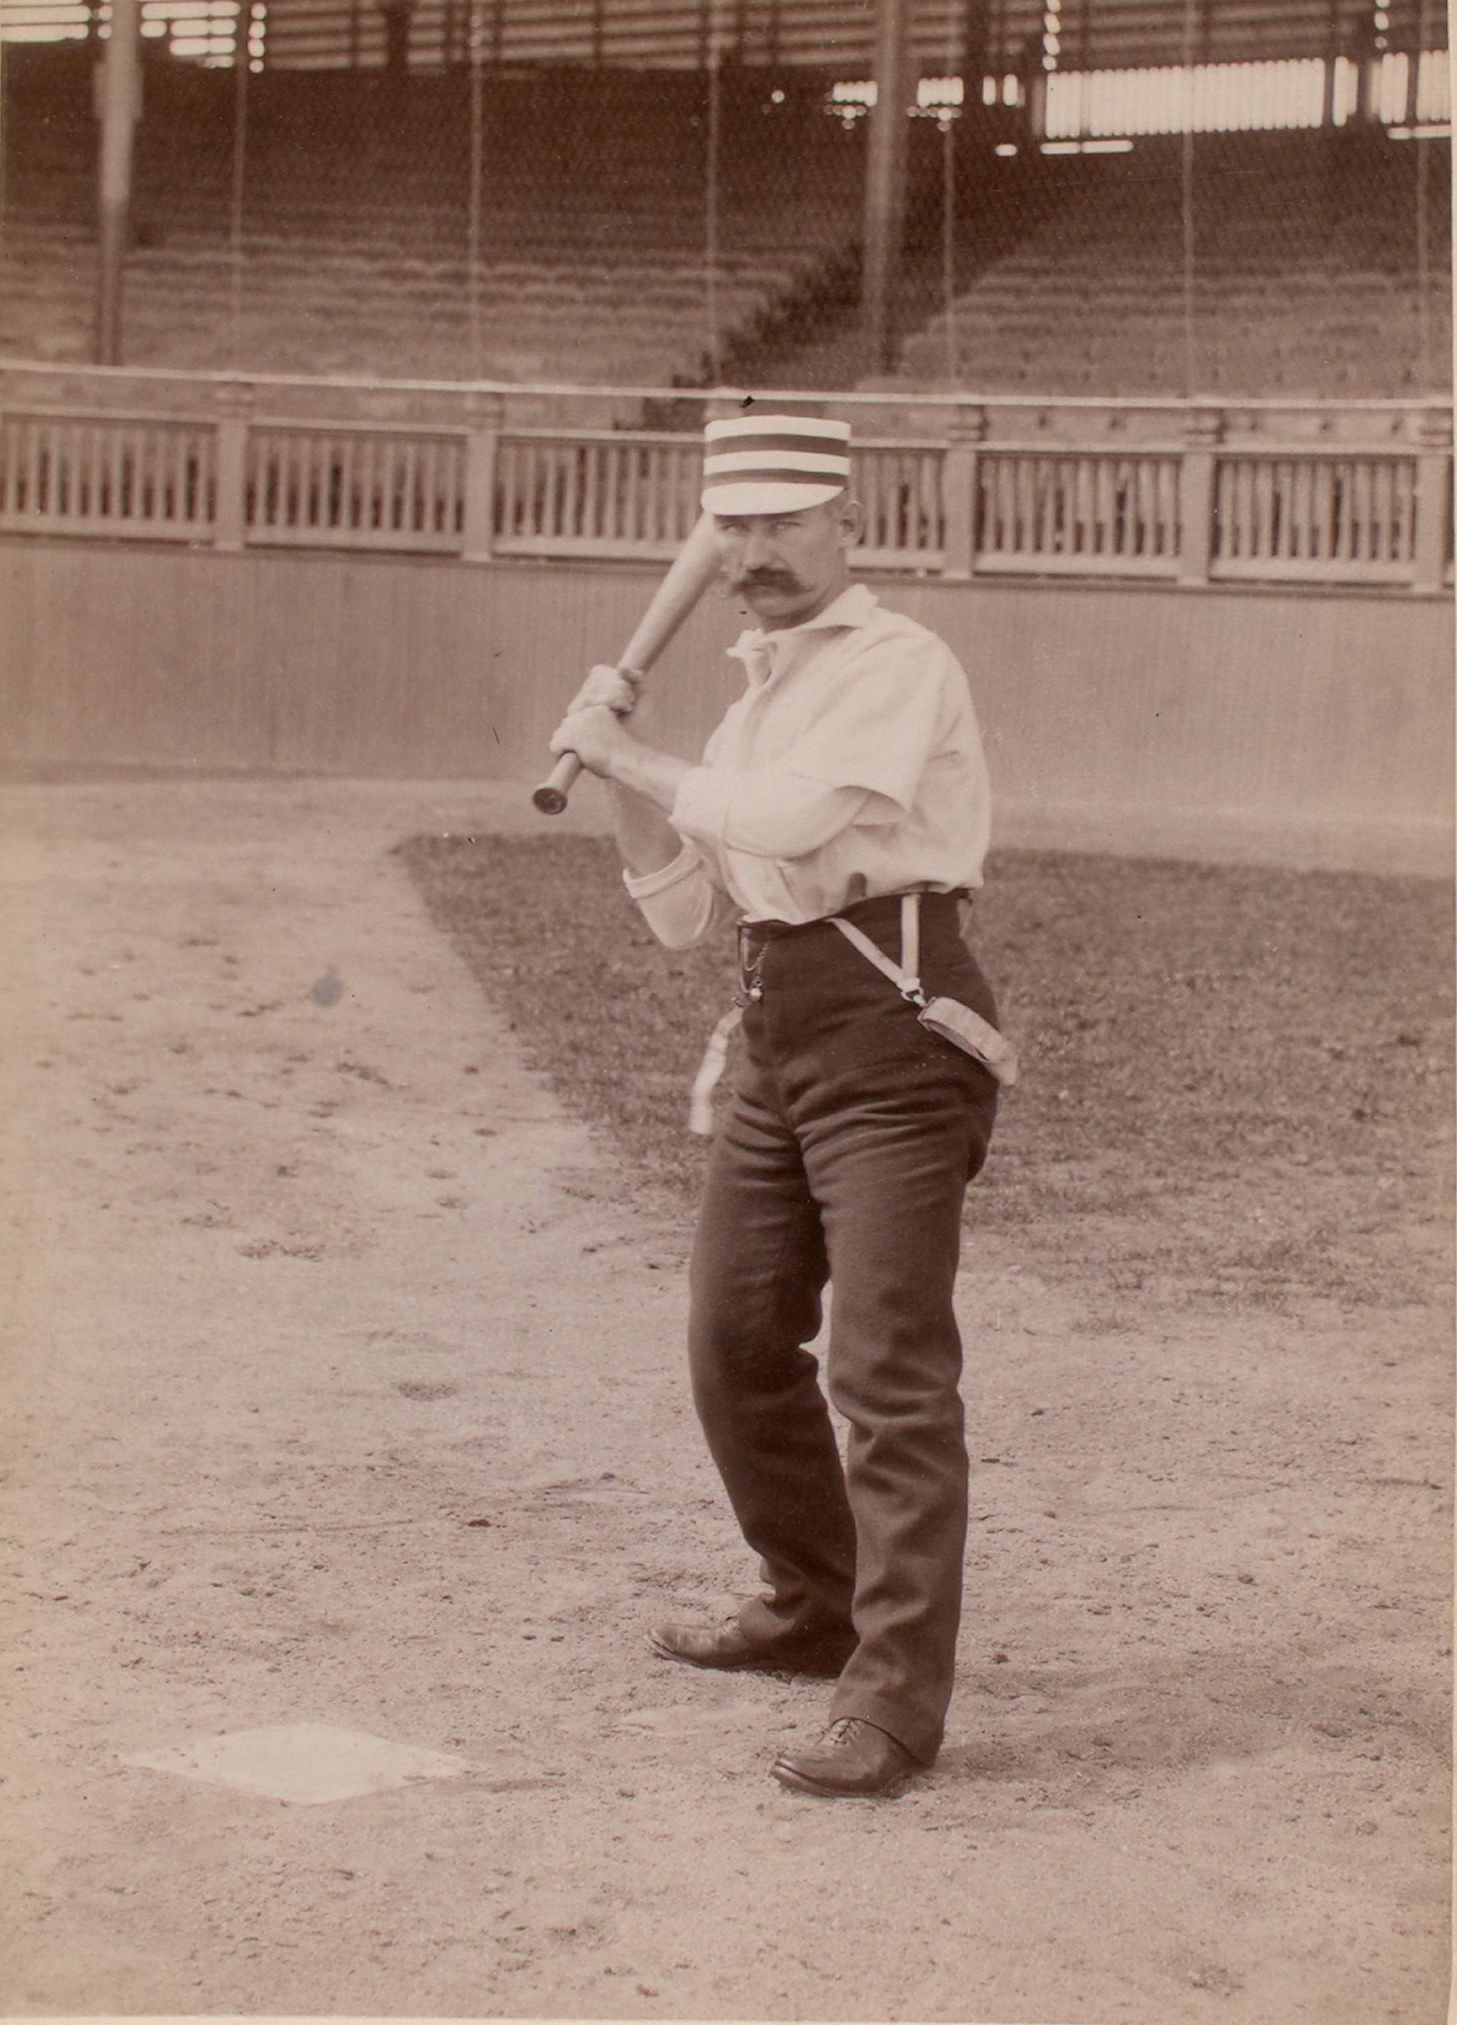 19th century baseball portraits